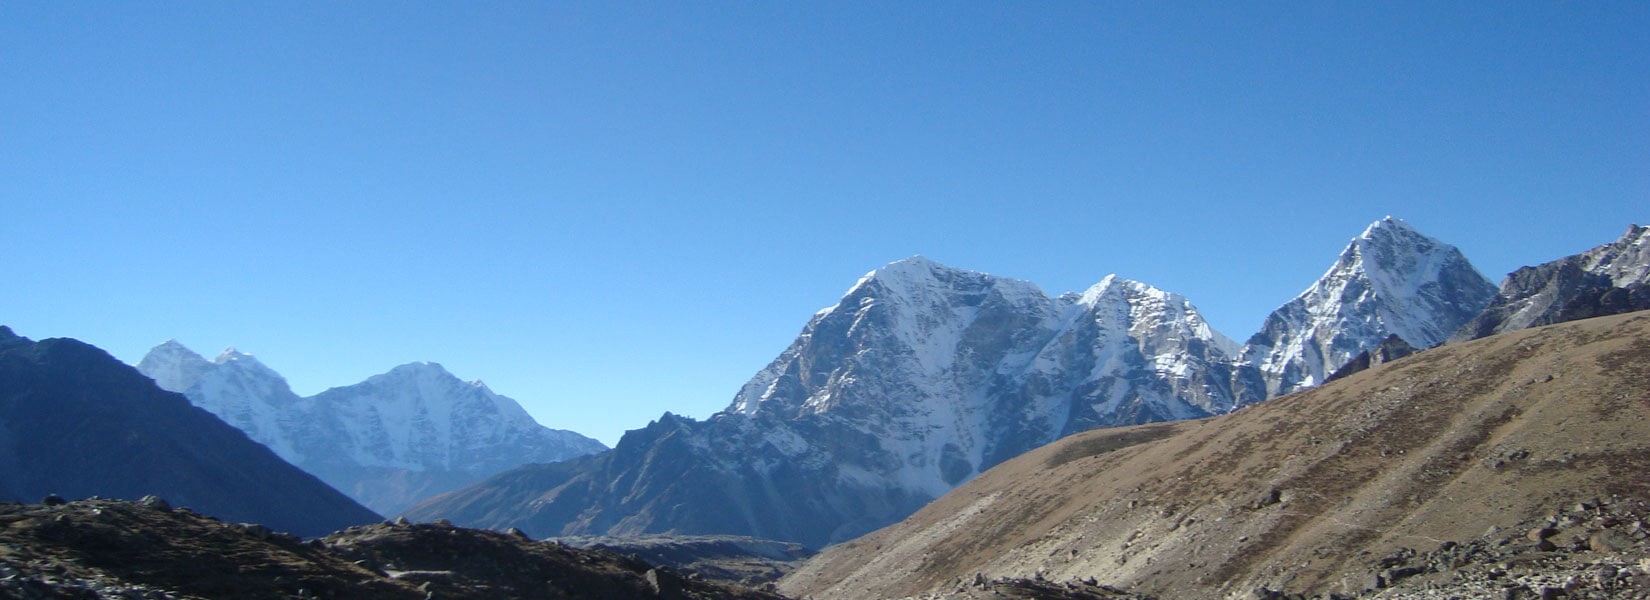 Best Time to Visit Everest Base Camp